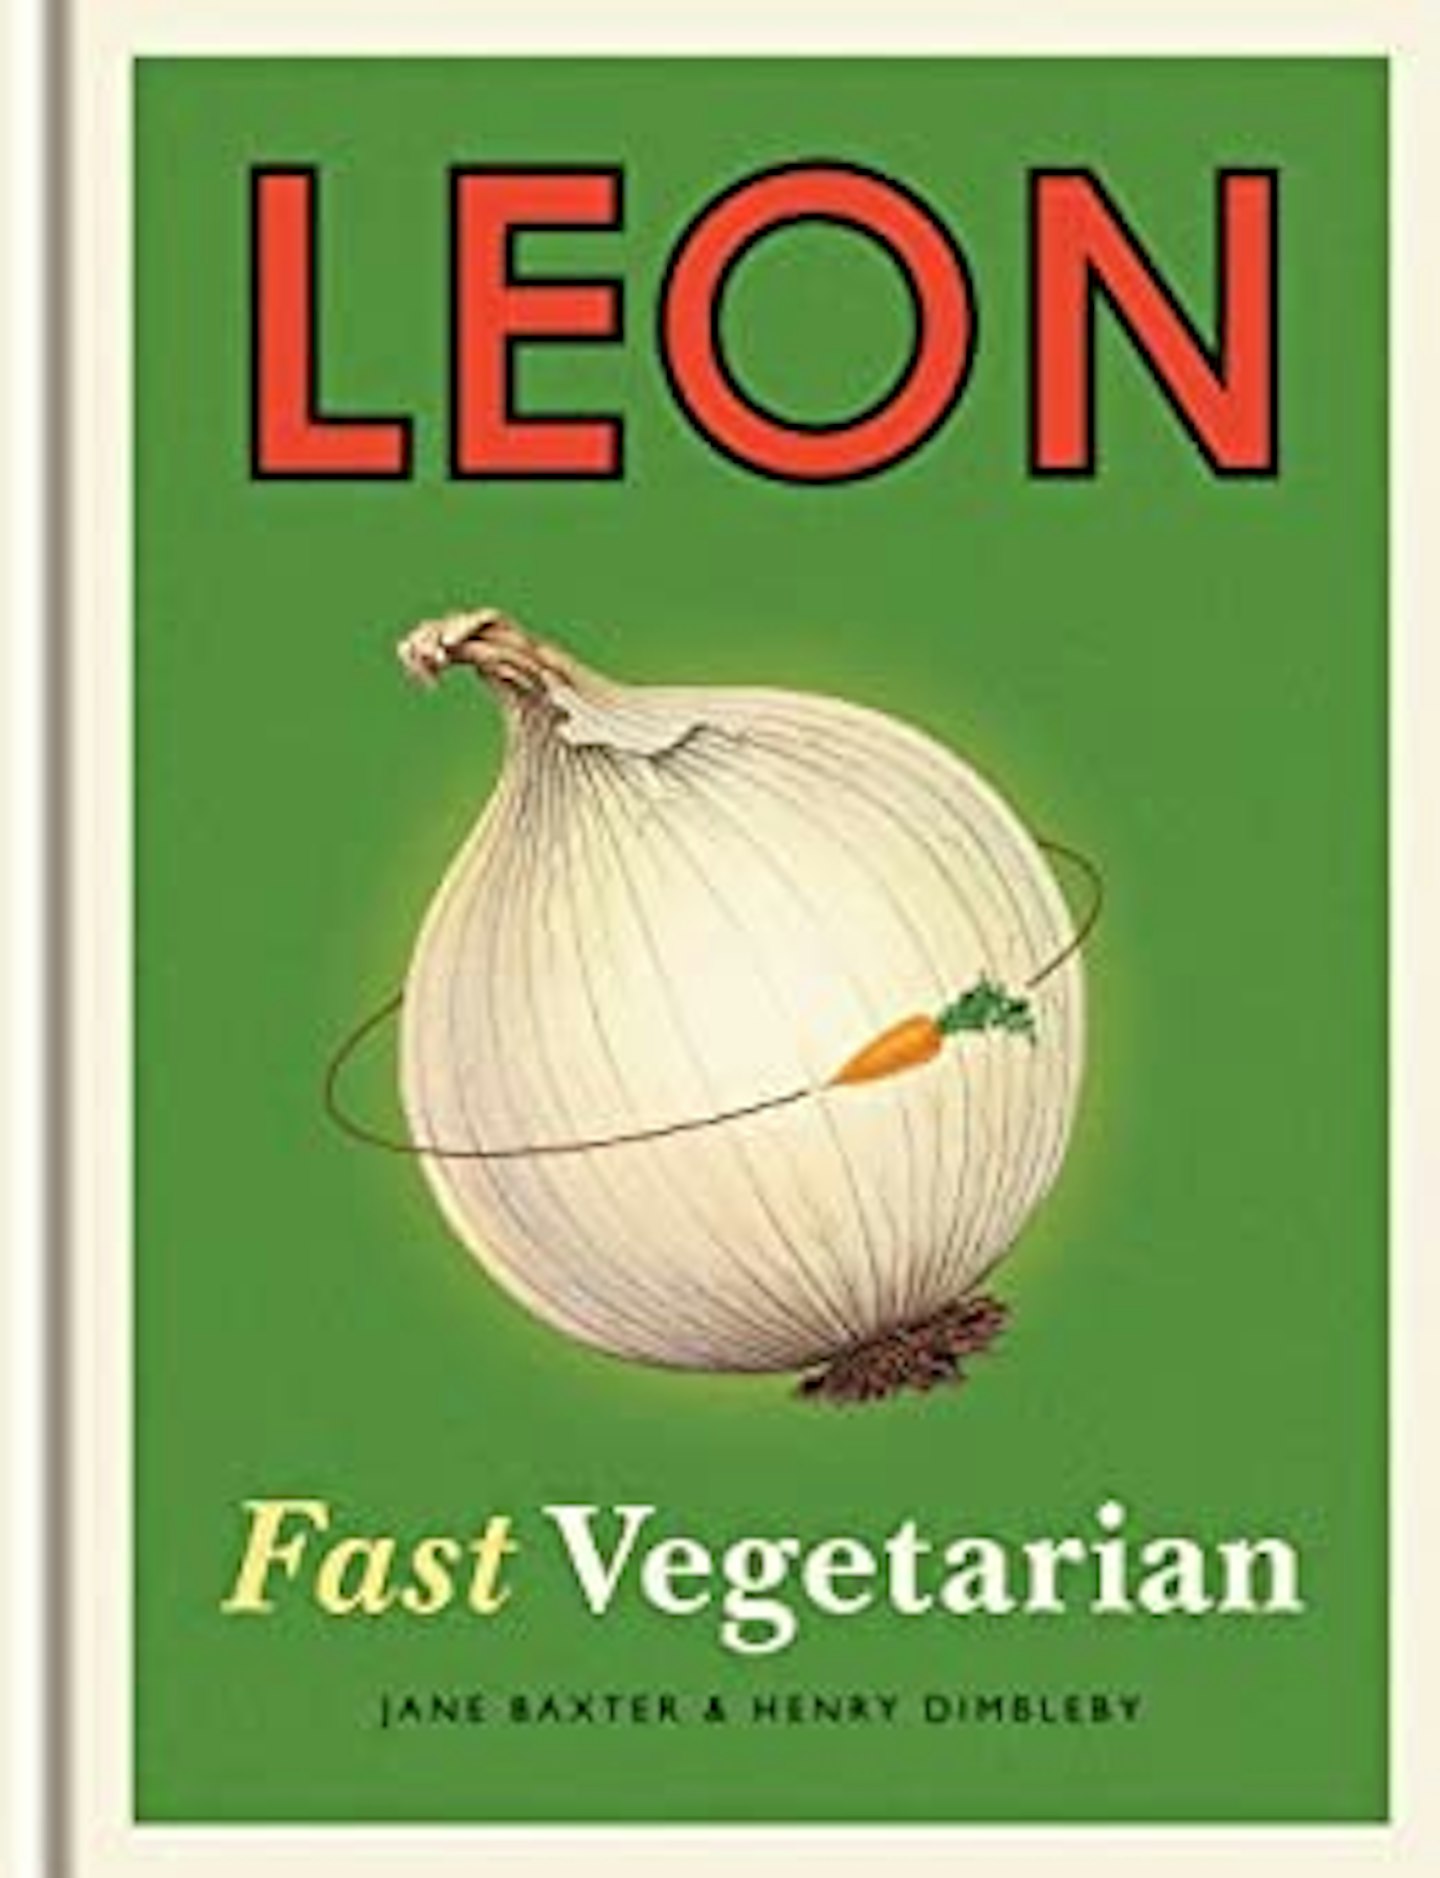 Leon Fast Vegetarian, Jane Baxter & Henry Dimbleby